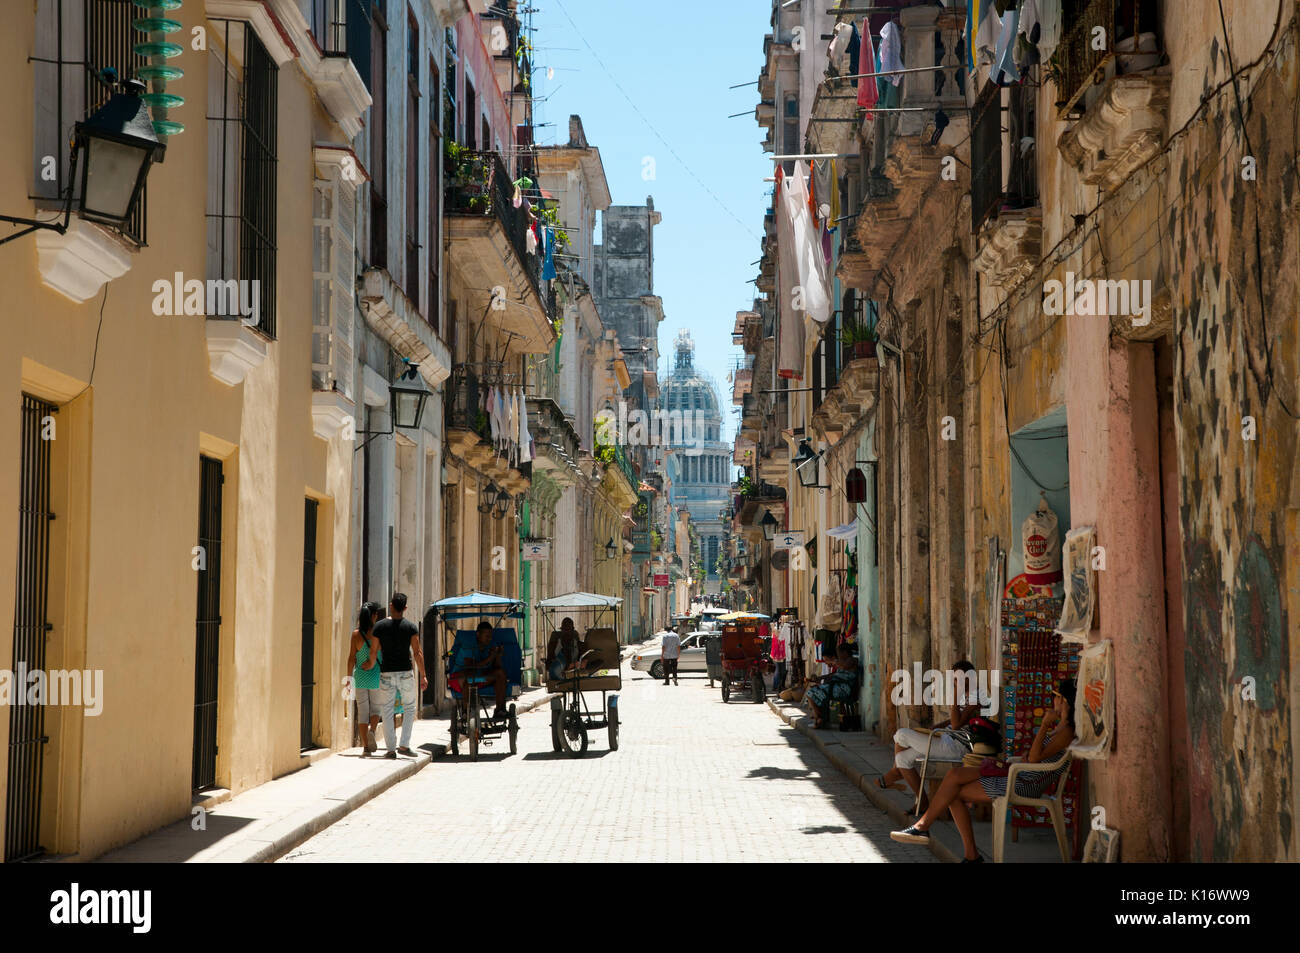 HAVANA, CUBA - June 7, 2015: Narrow residential & commercial street in the capital communist nation Stock Photo